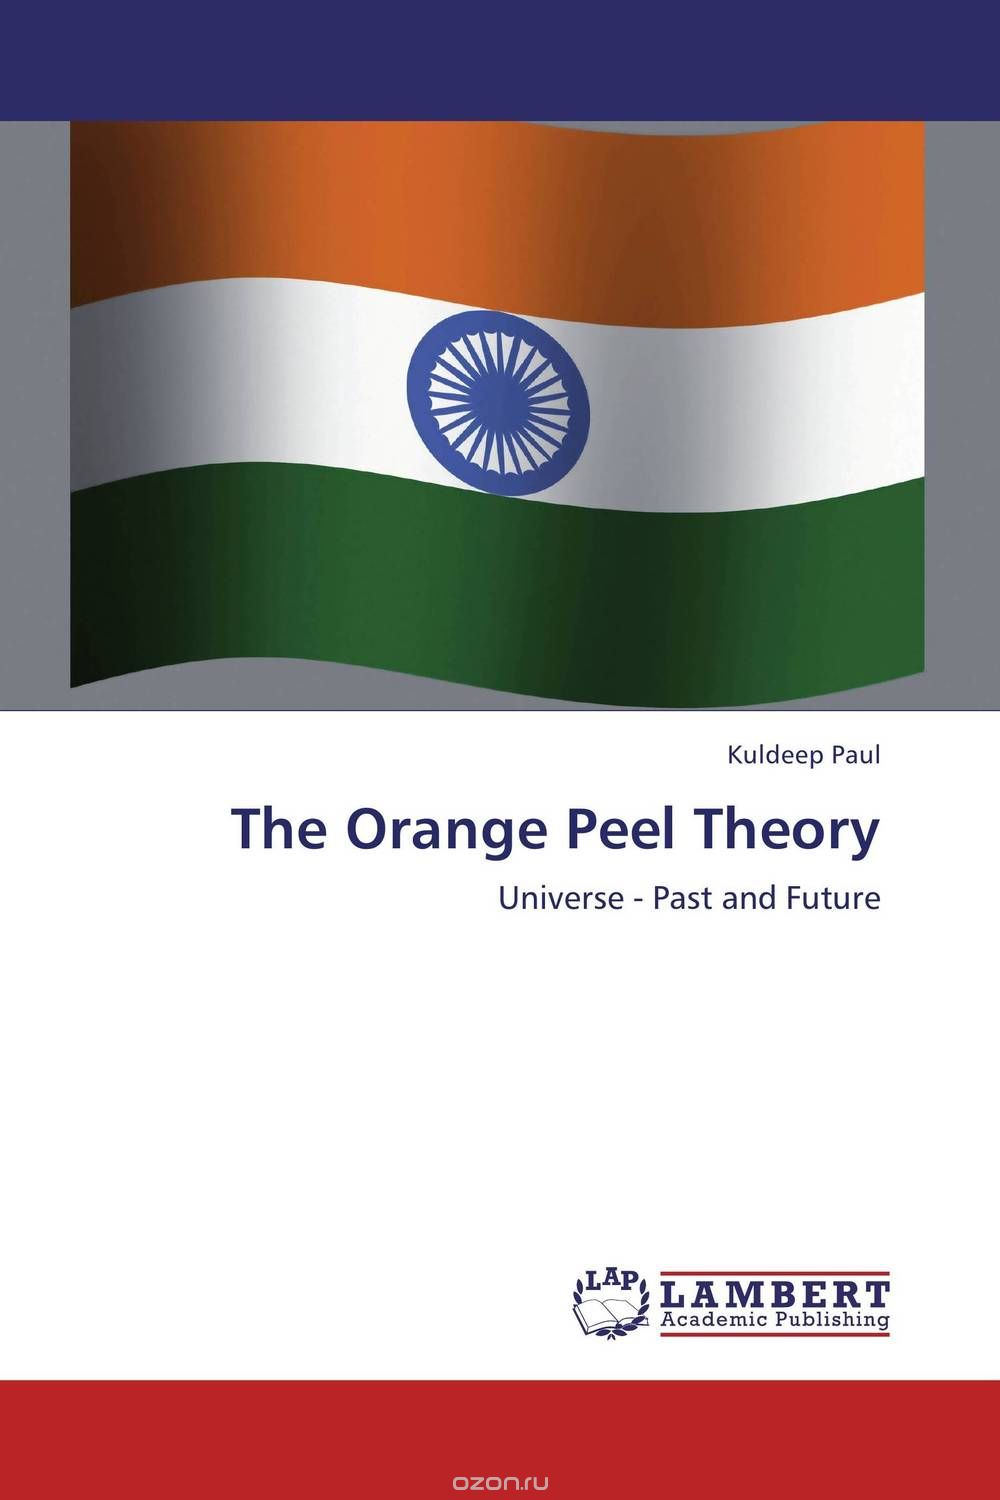 Скачать книгу "The Orange Peel Theory"